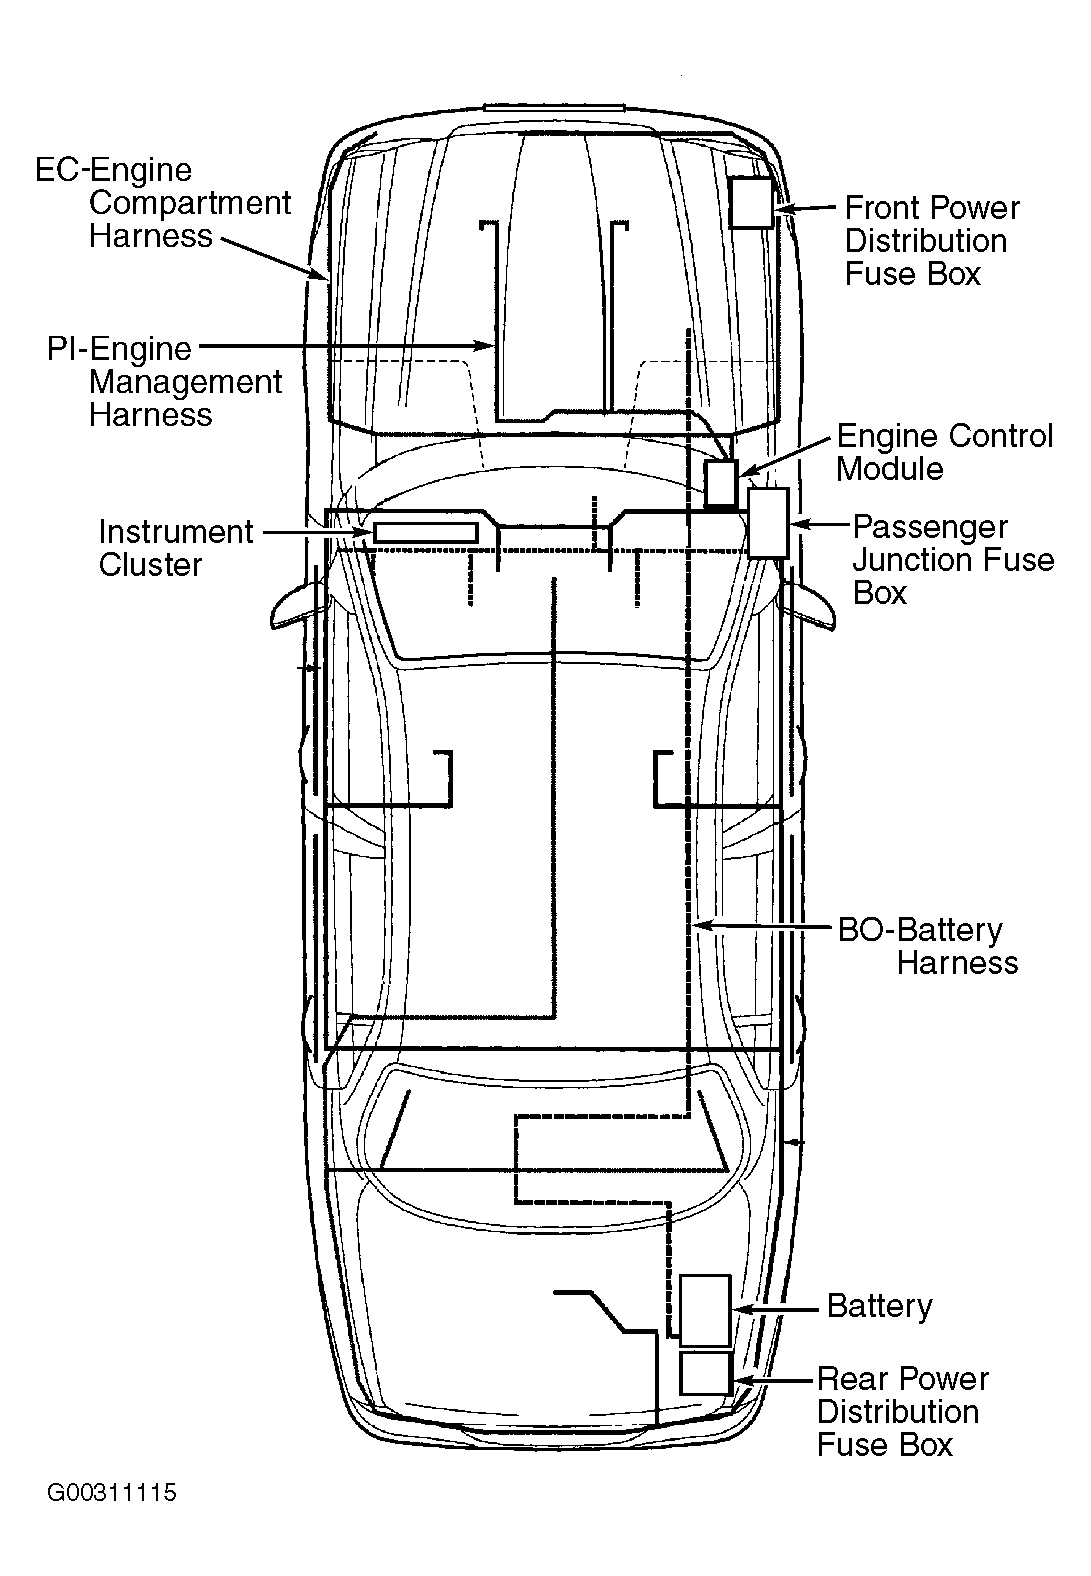 Jaguar XJ8 Vanden Plas 2004 - Component Locations -  Identifying Front Power Distribution Fuse Box Location